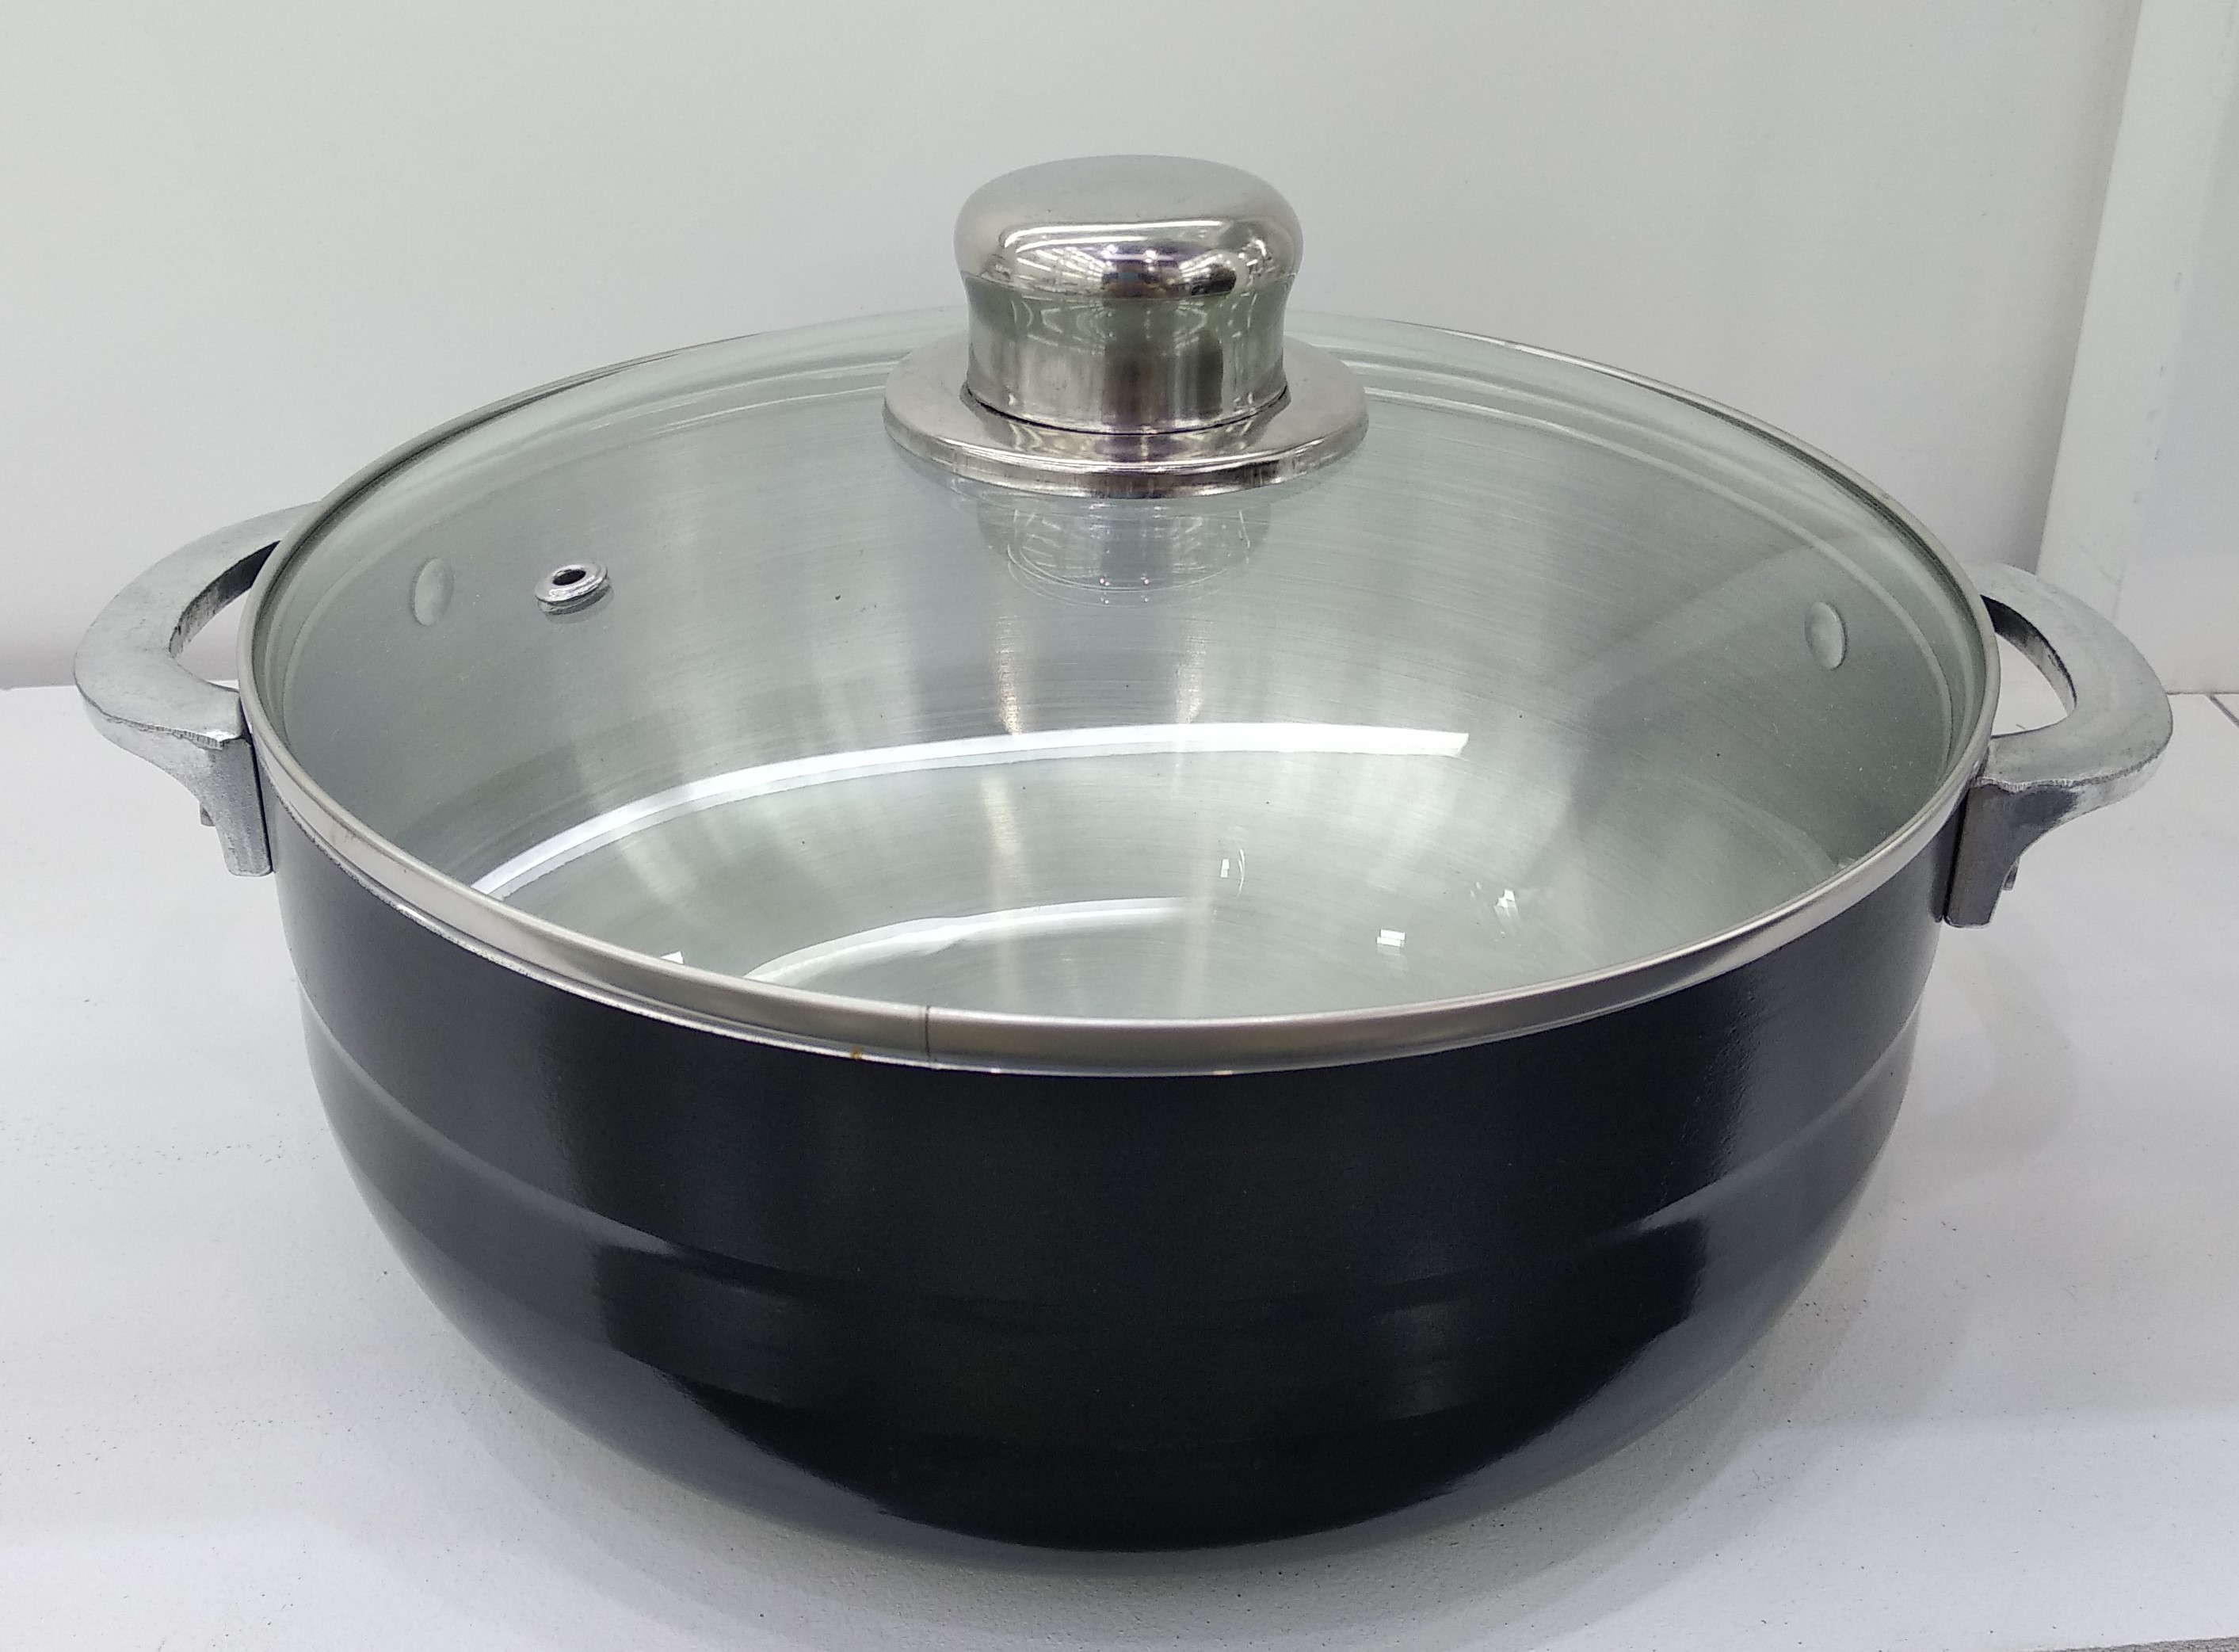 China Aluminium Caldero Pot, Cookware, Cooking Pot, Casserole (Glass Cover available) for sale